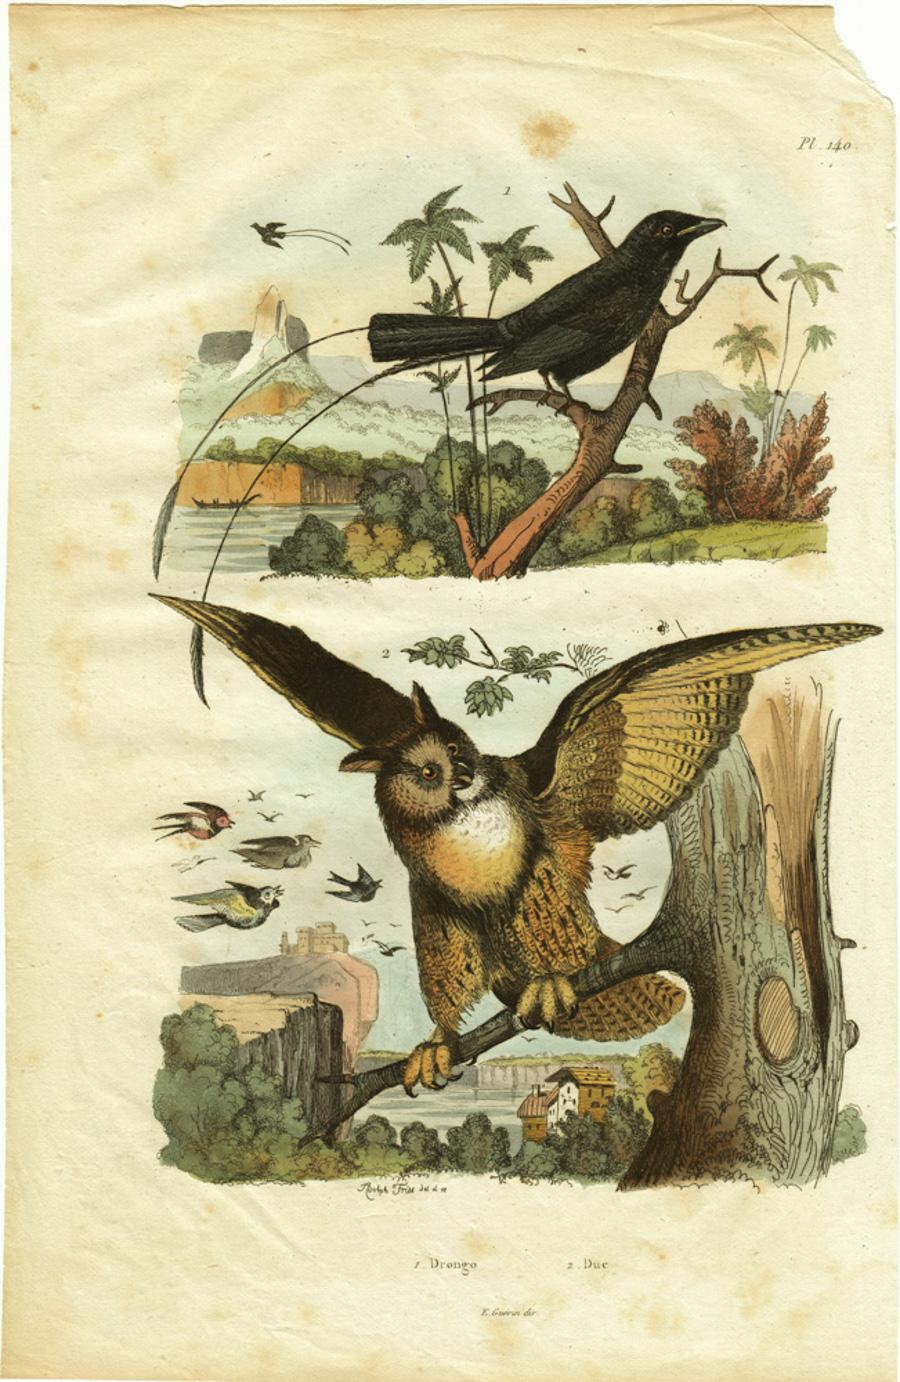 Adolph Fries Animal Print - Drongo / Duc; Pl. 140